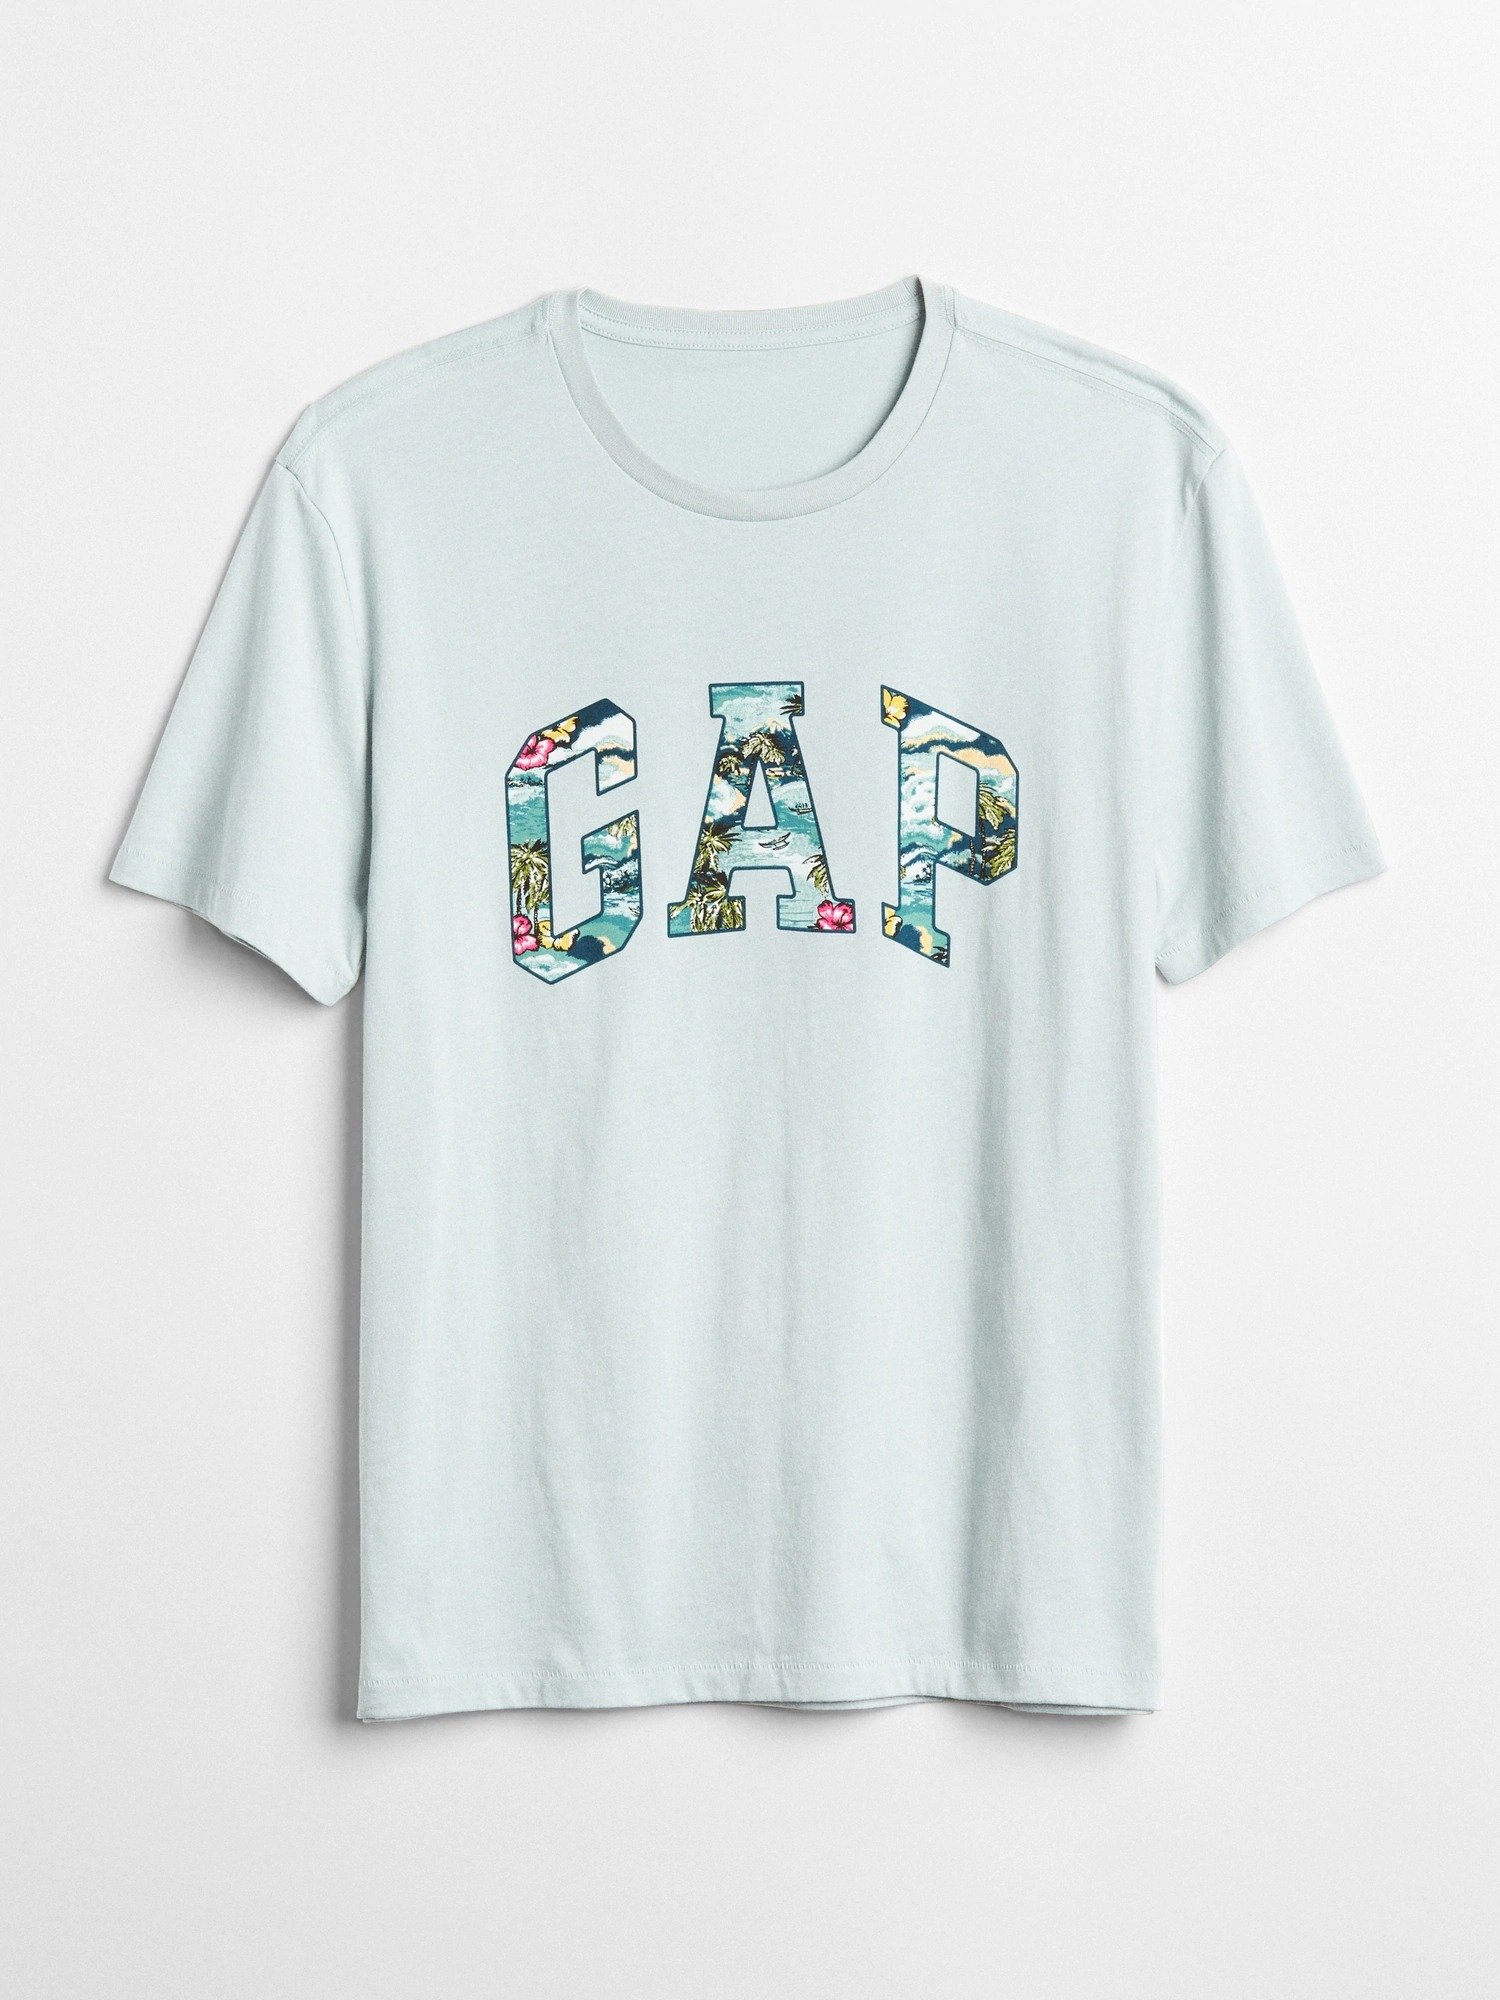 Gap Logo T-Shirt product image